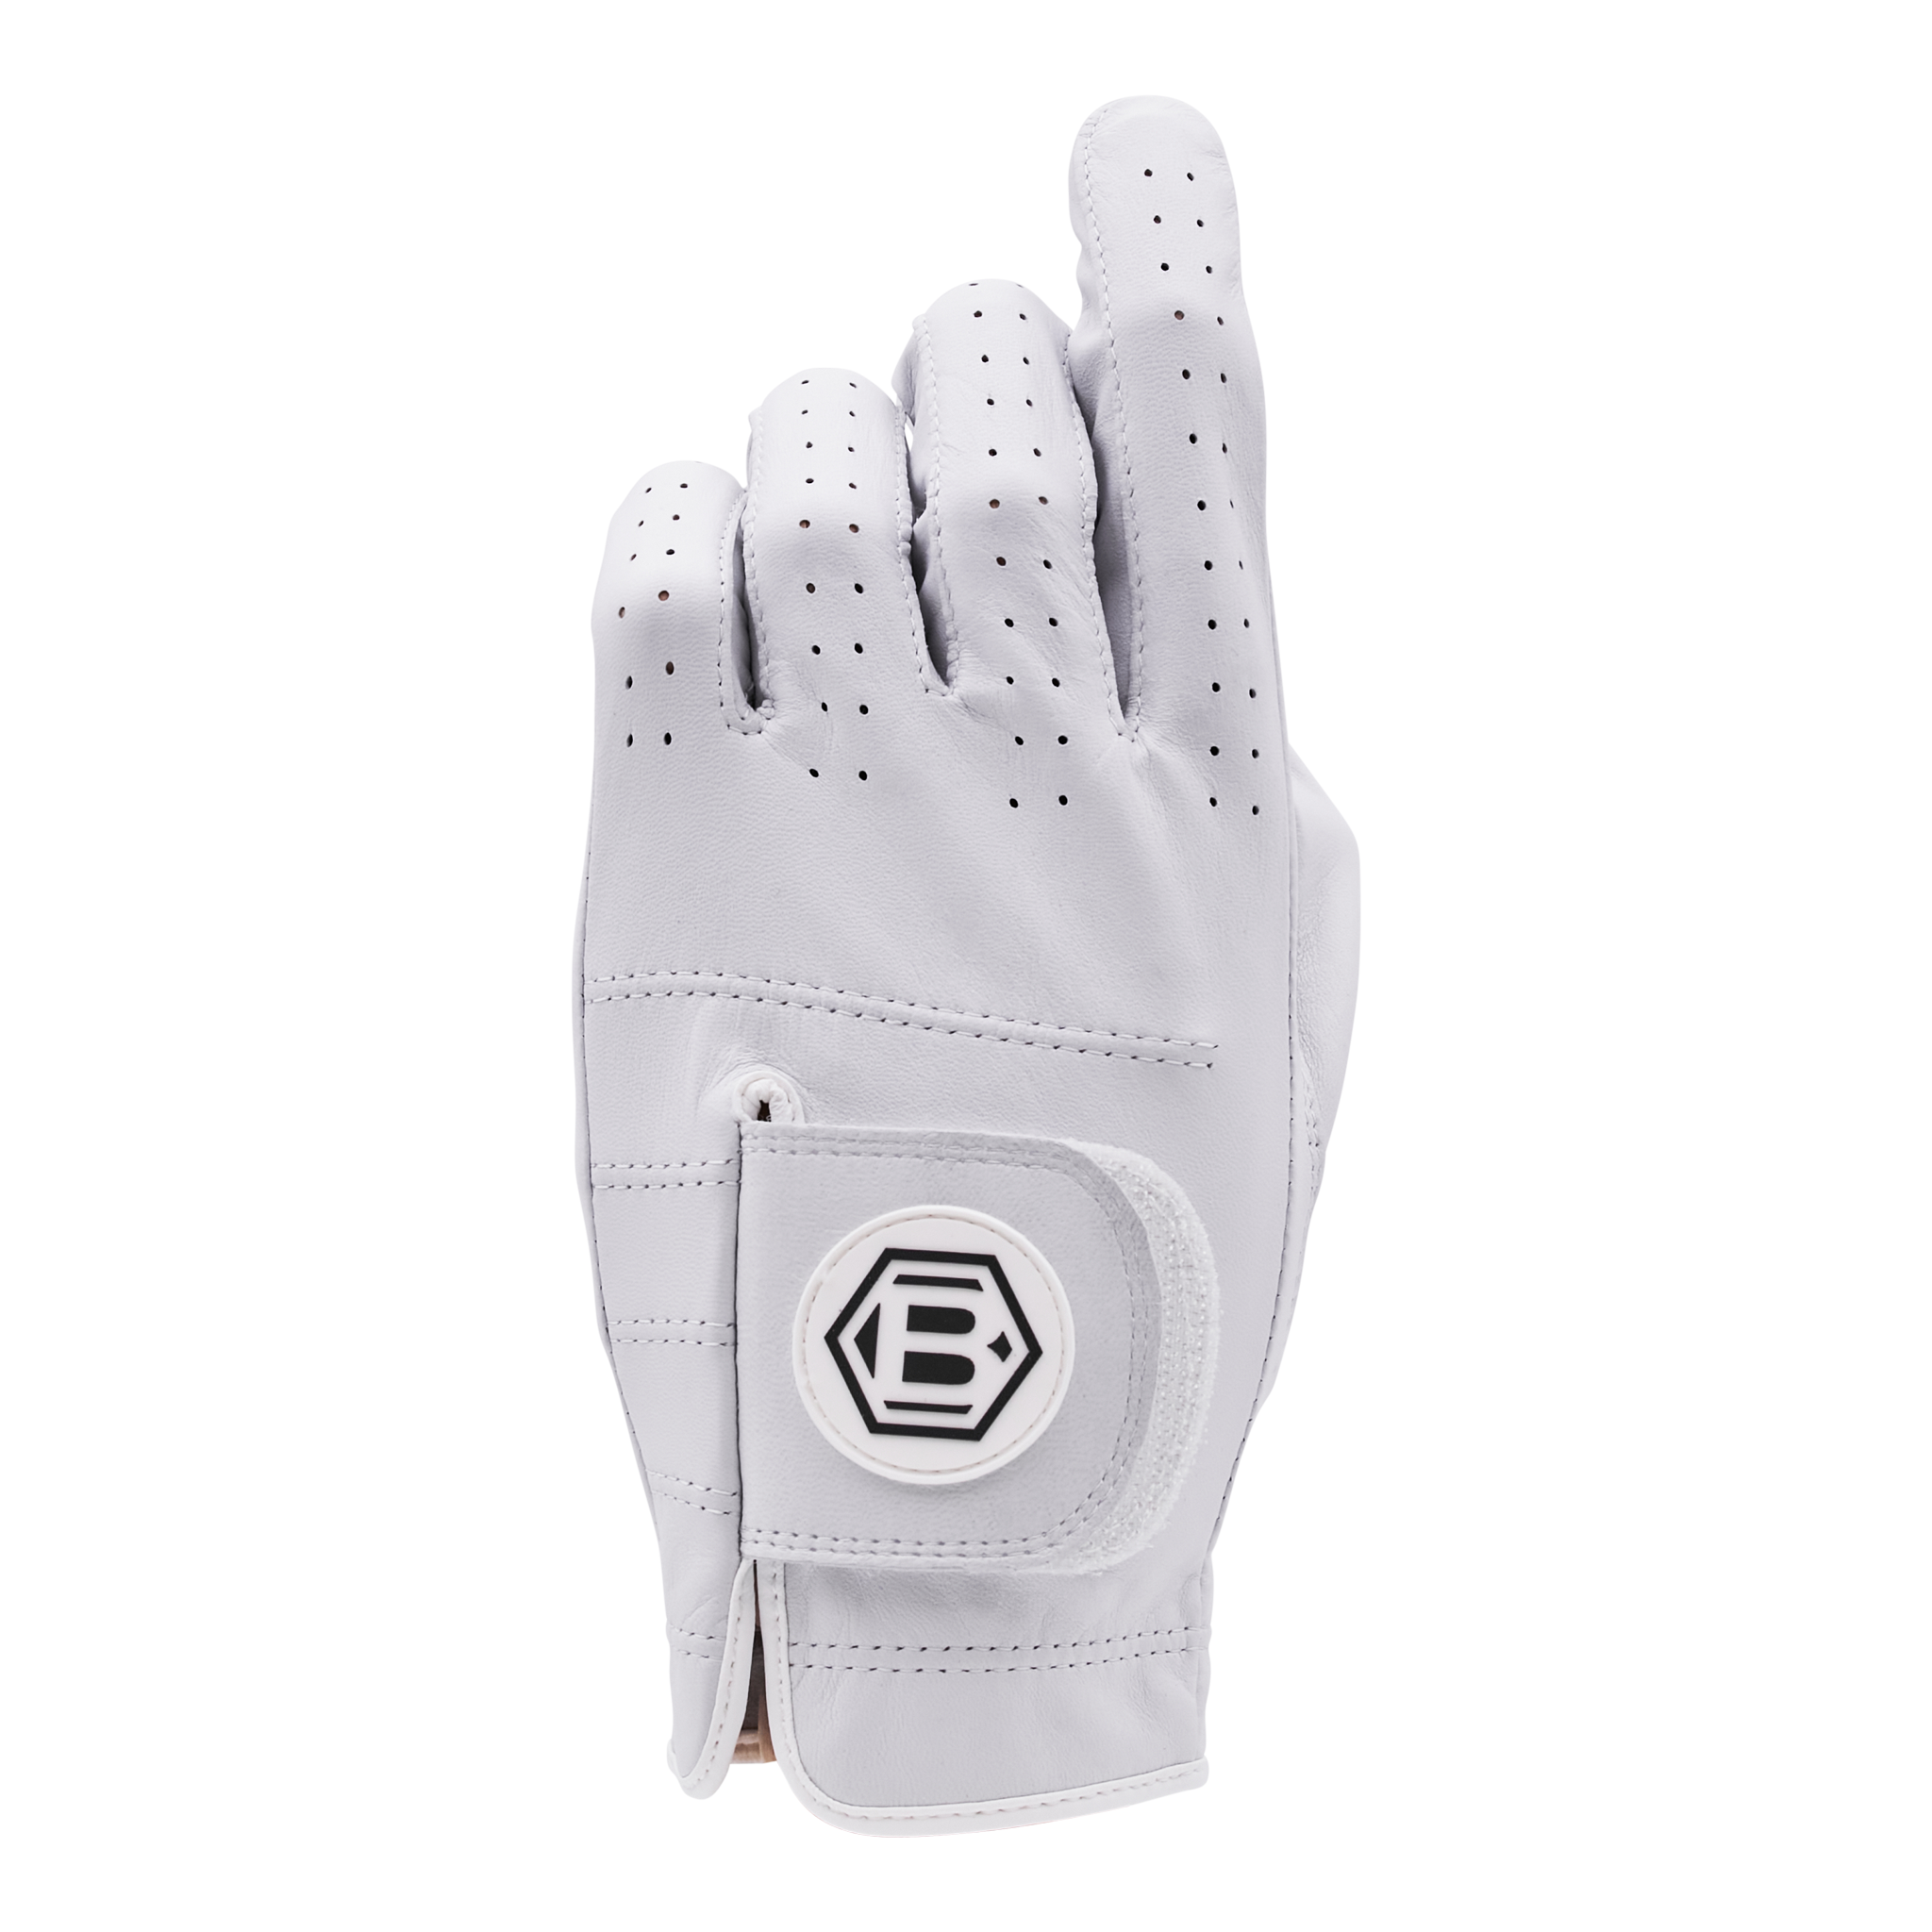 Hex B Premium Golf Glove - Left Hand (For Righties) - back